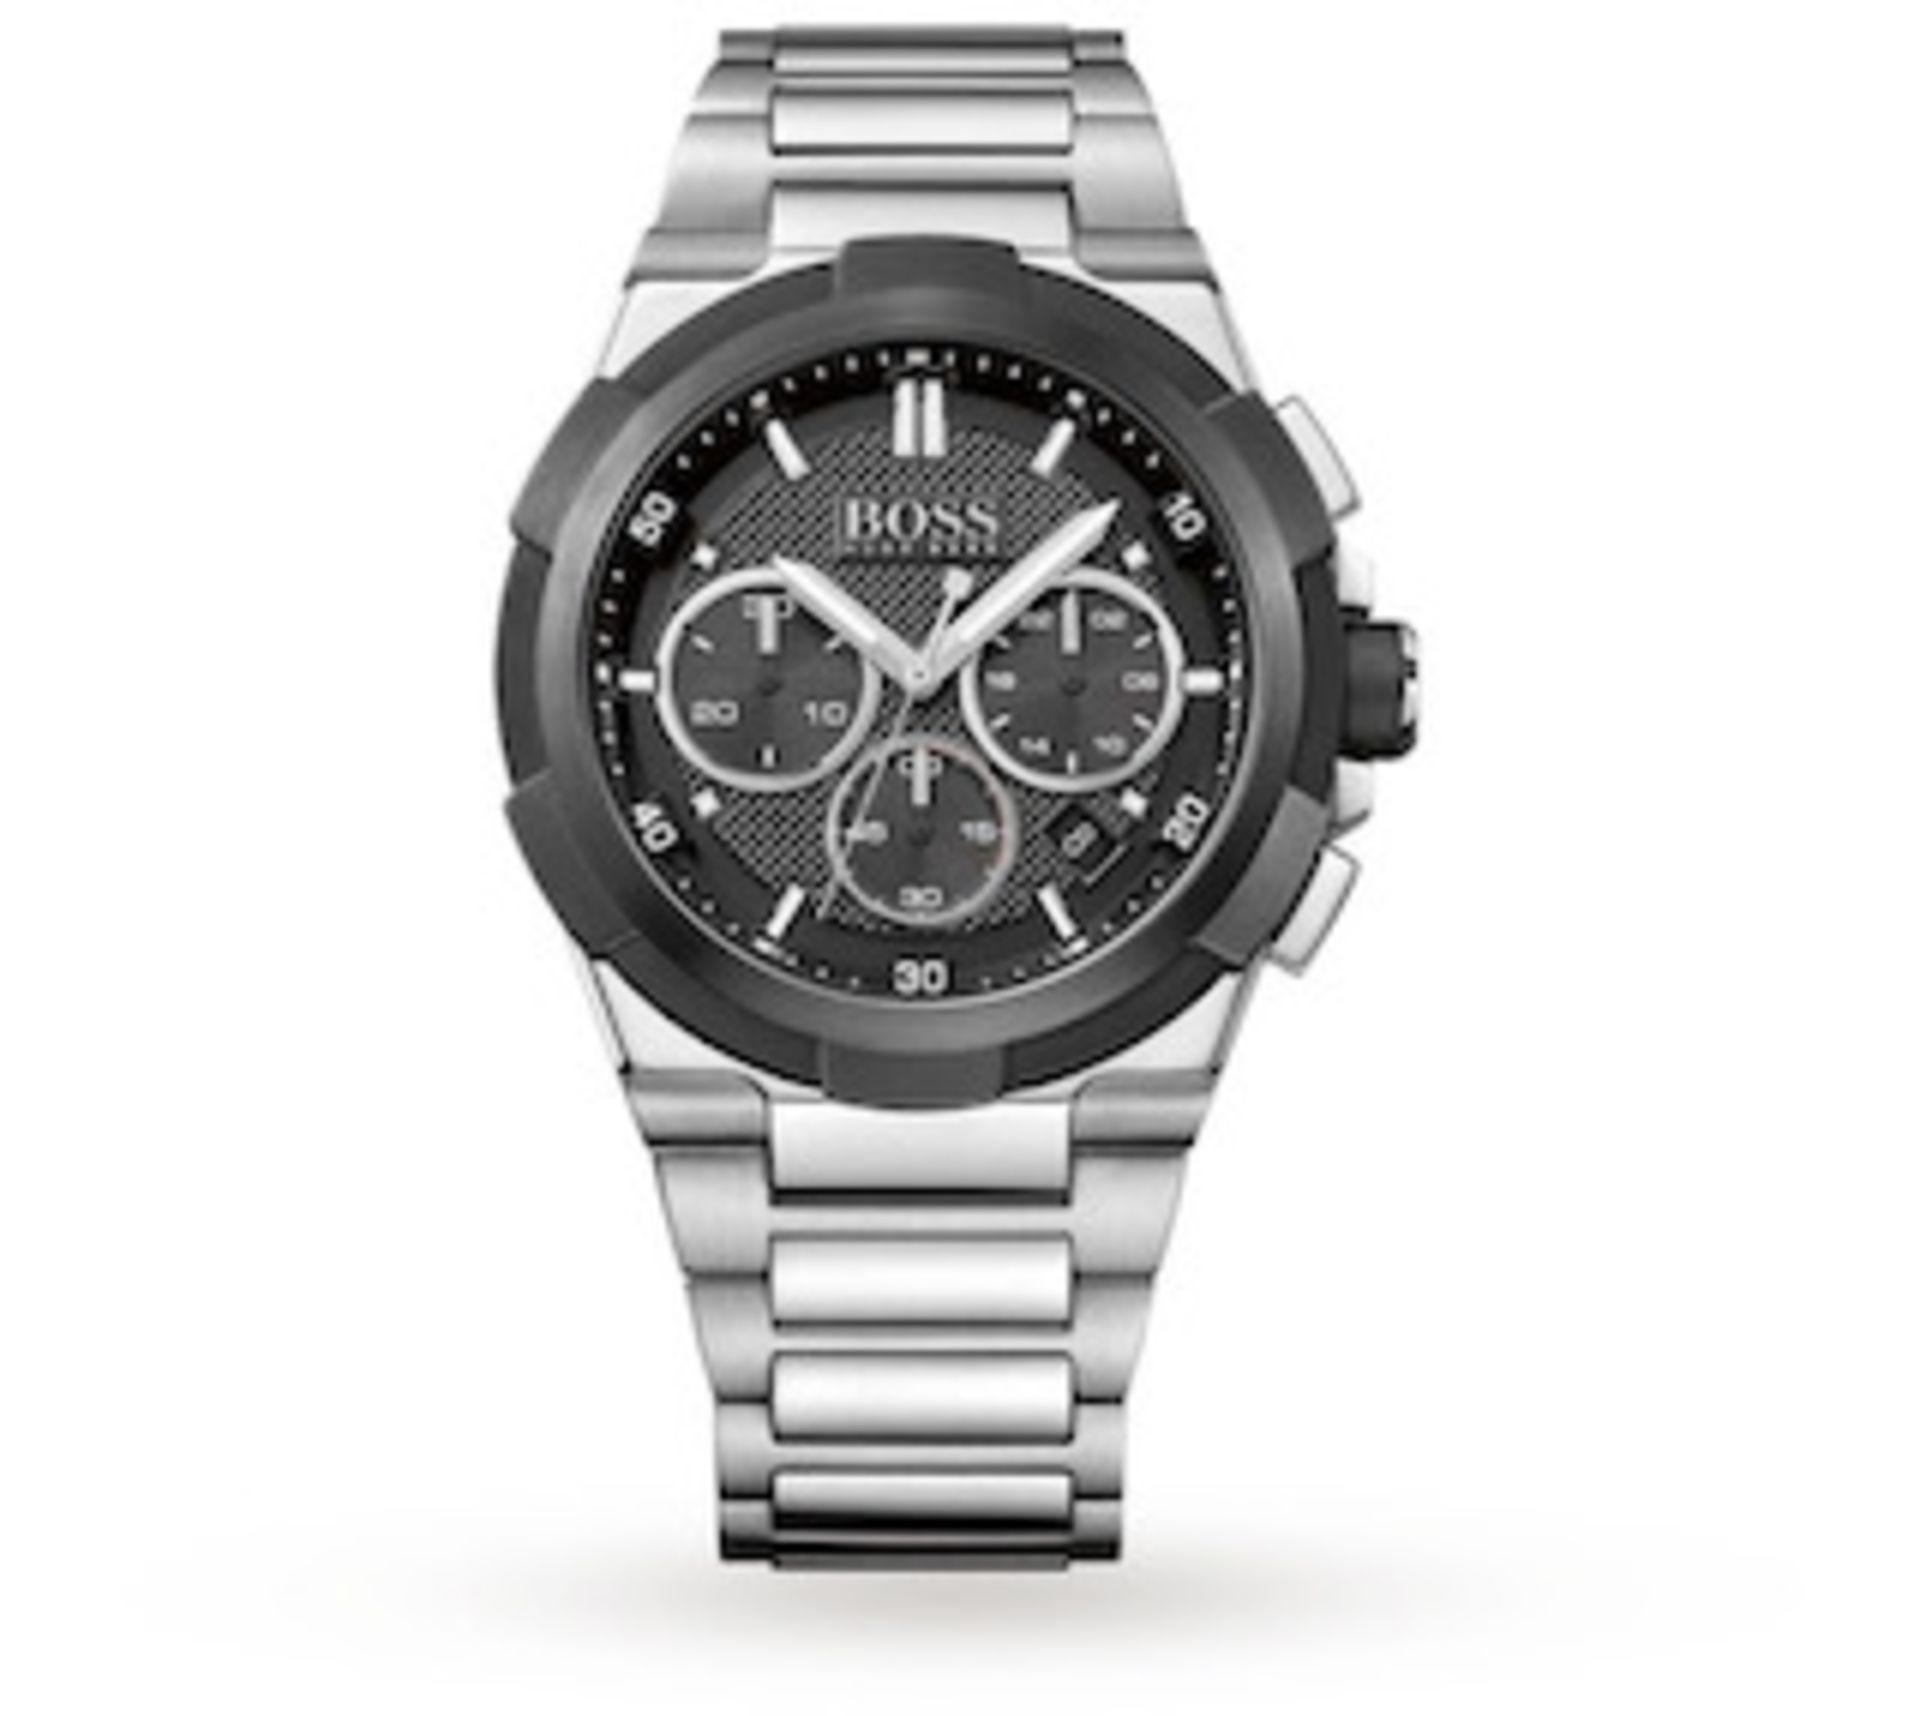 Hugo Boss 1513359 Men's Supernova Black Dial Silver Bracelet Chronograph Watch - Image 2 of 5